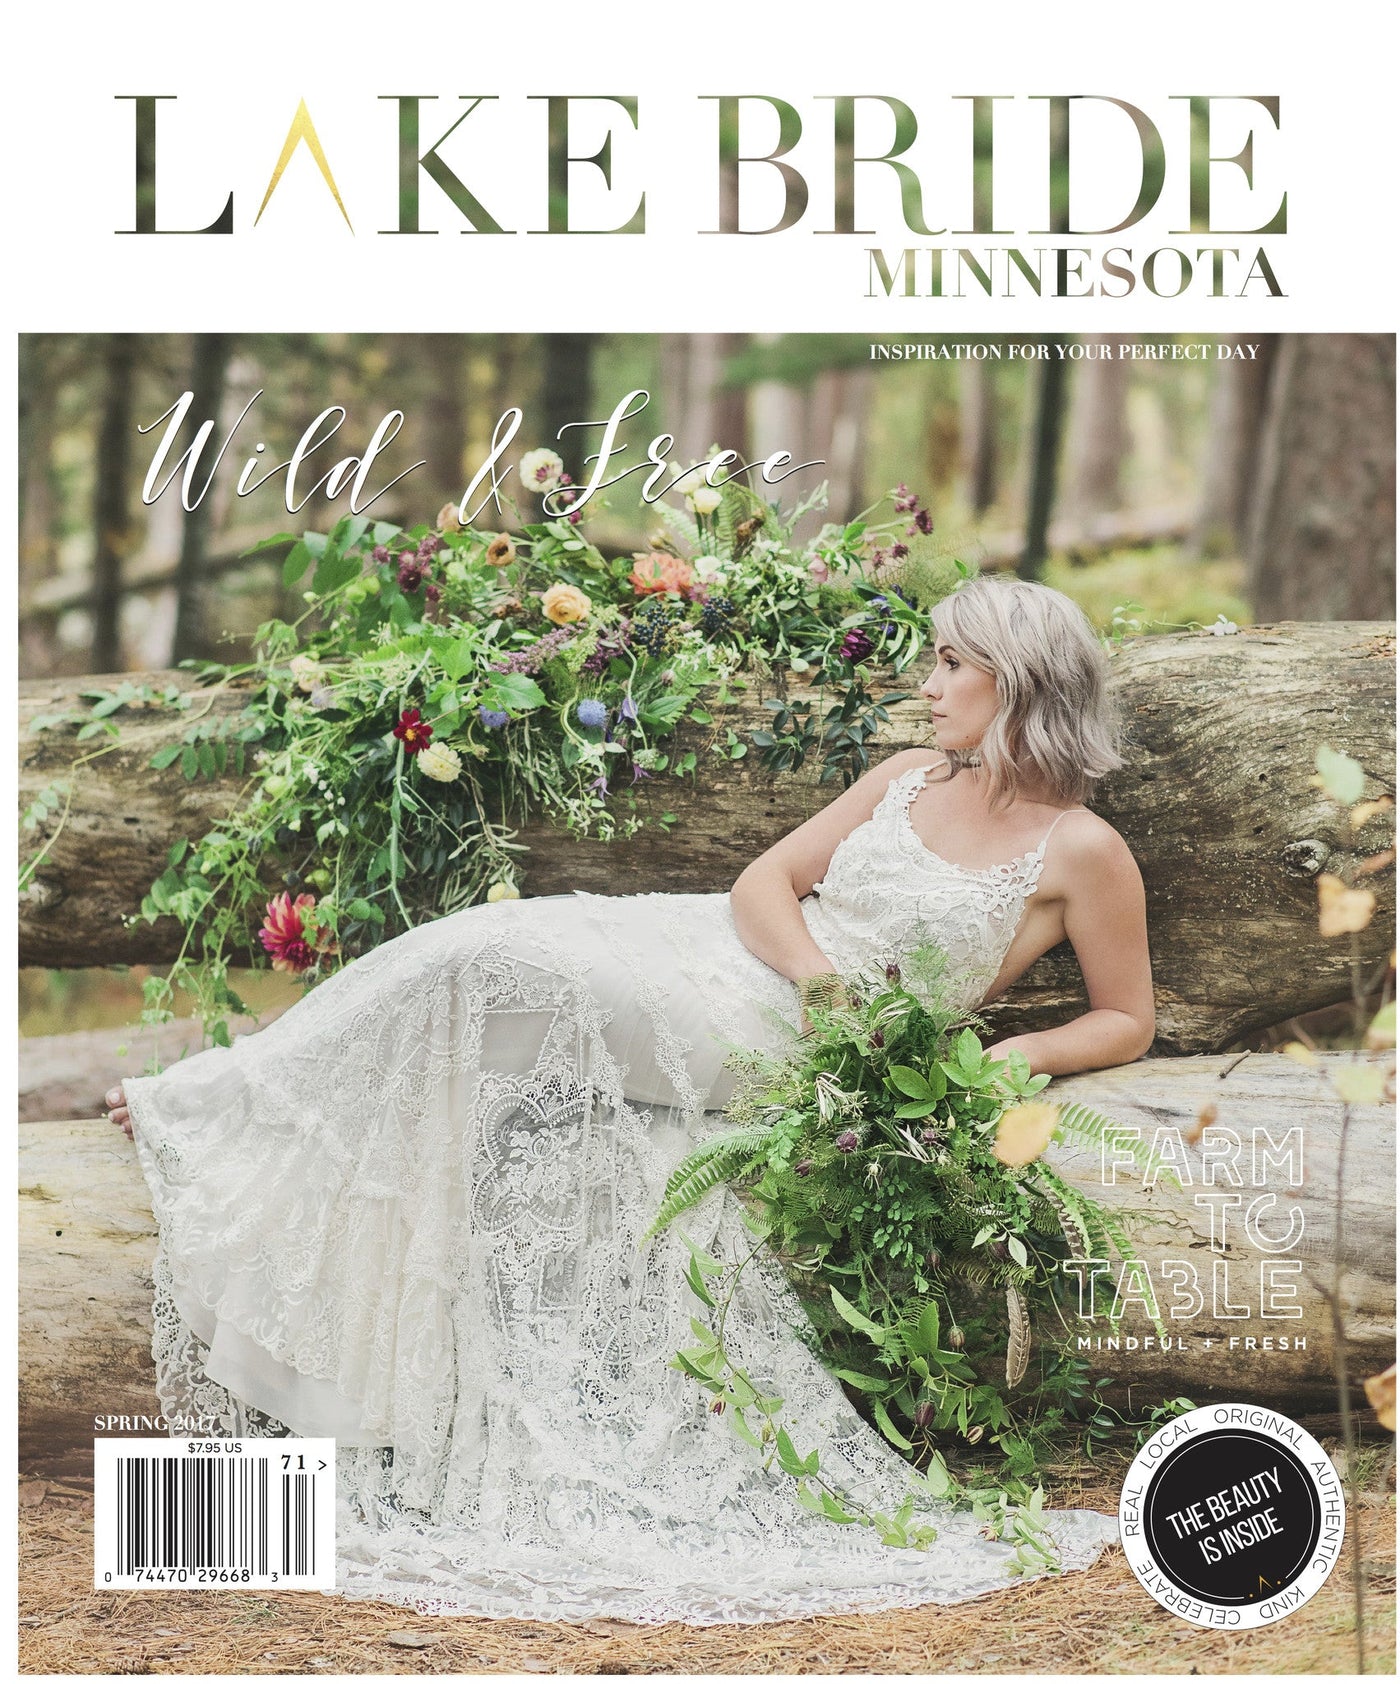 Lake Bride Magazine: Volume 2, Issue 1 - The Lake and Company